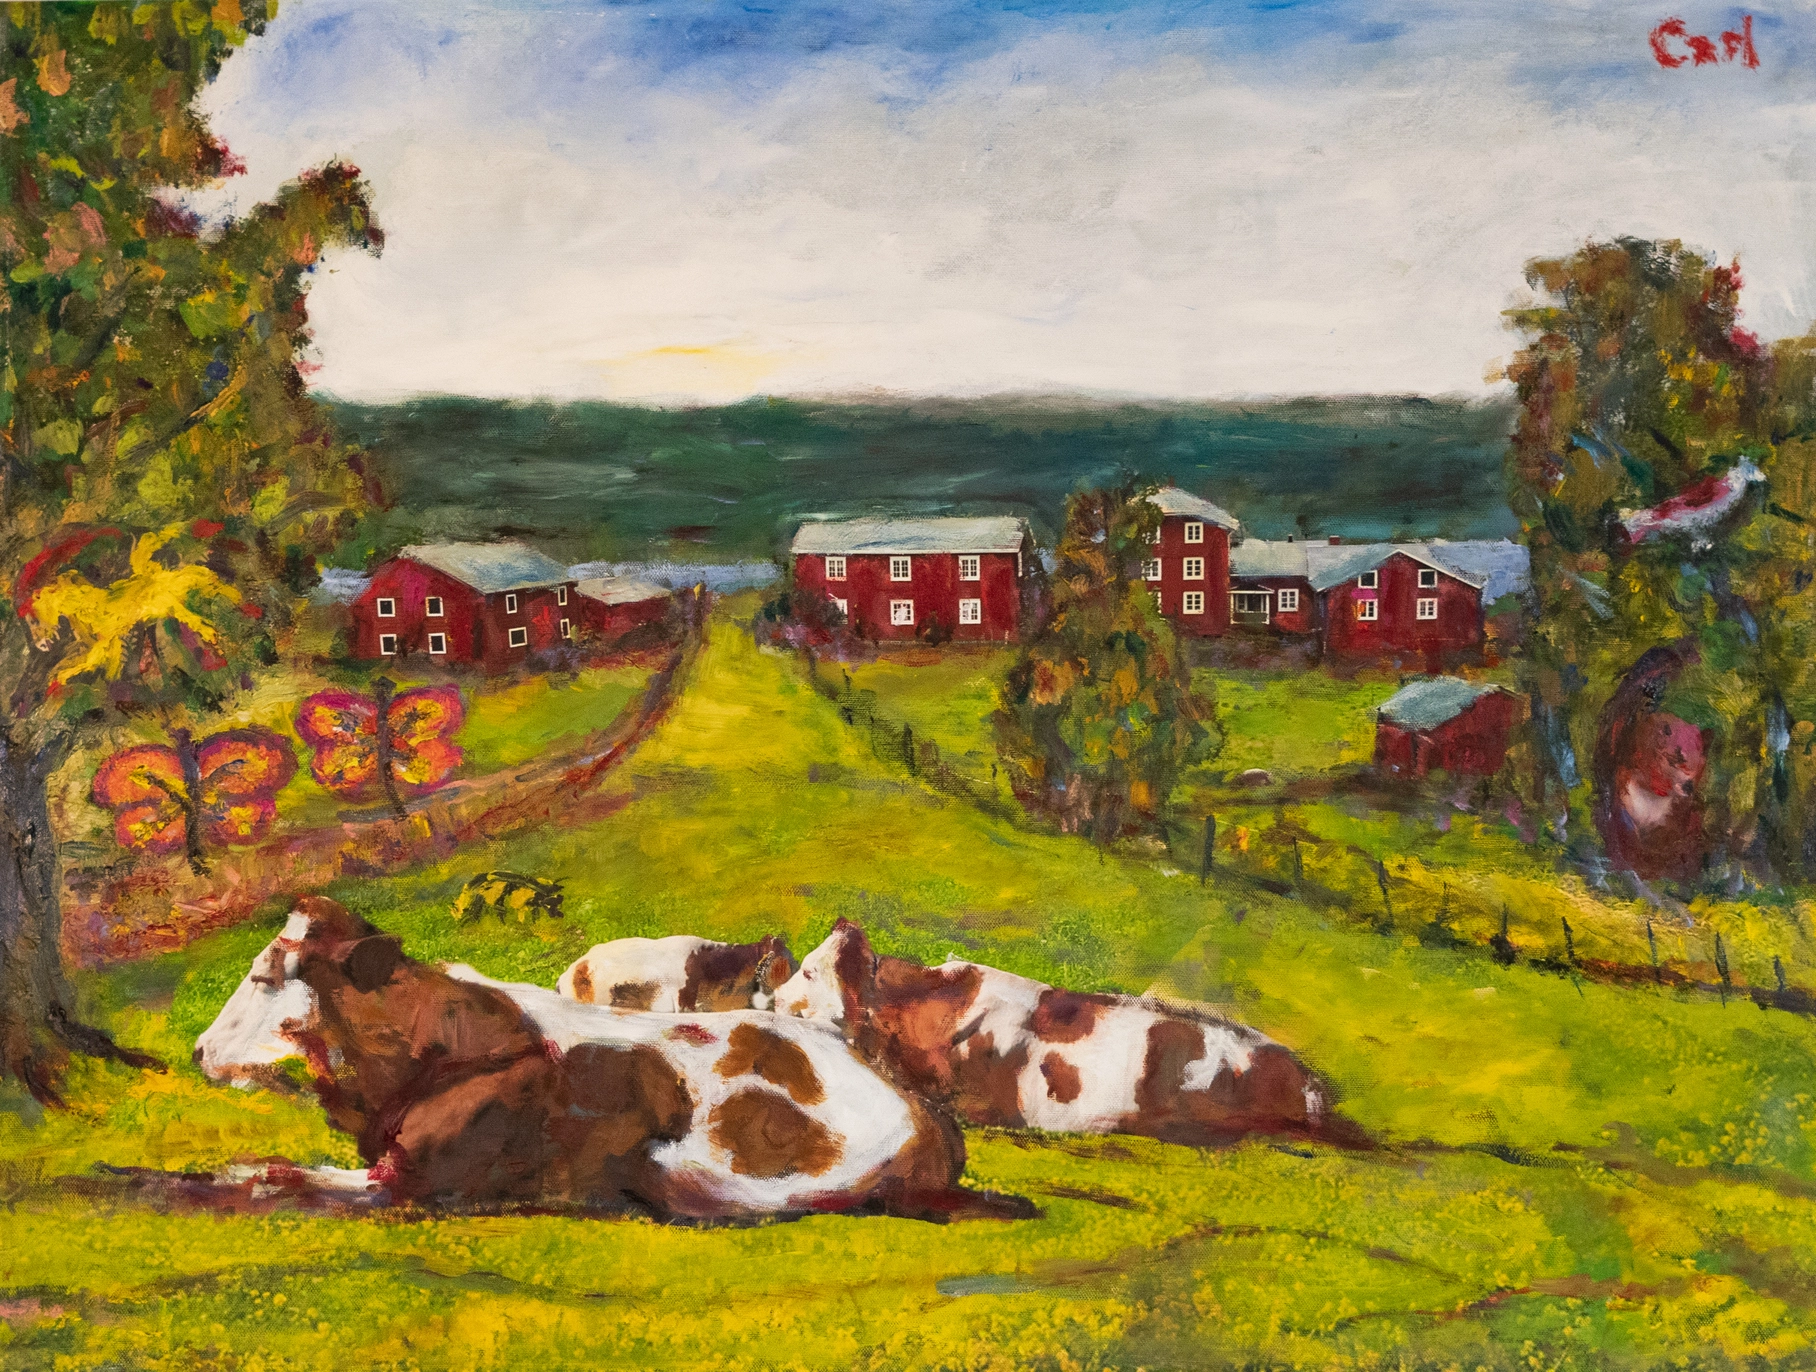 Swedish farm with cows